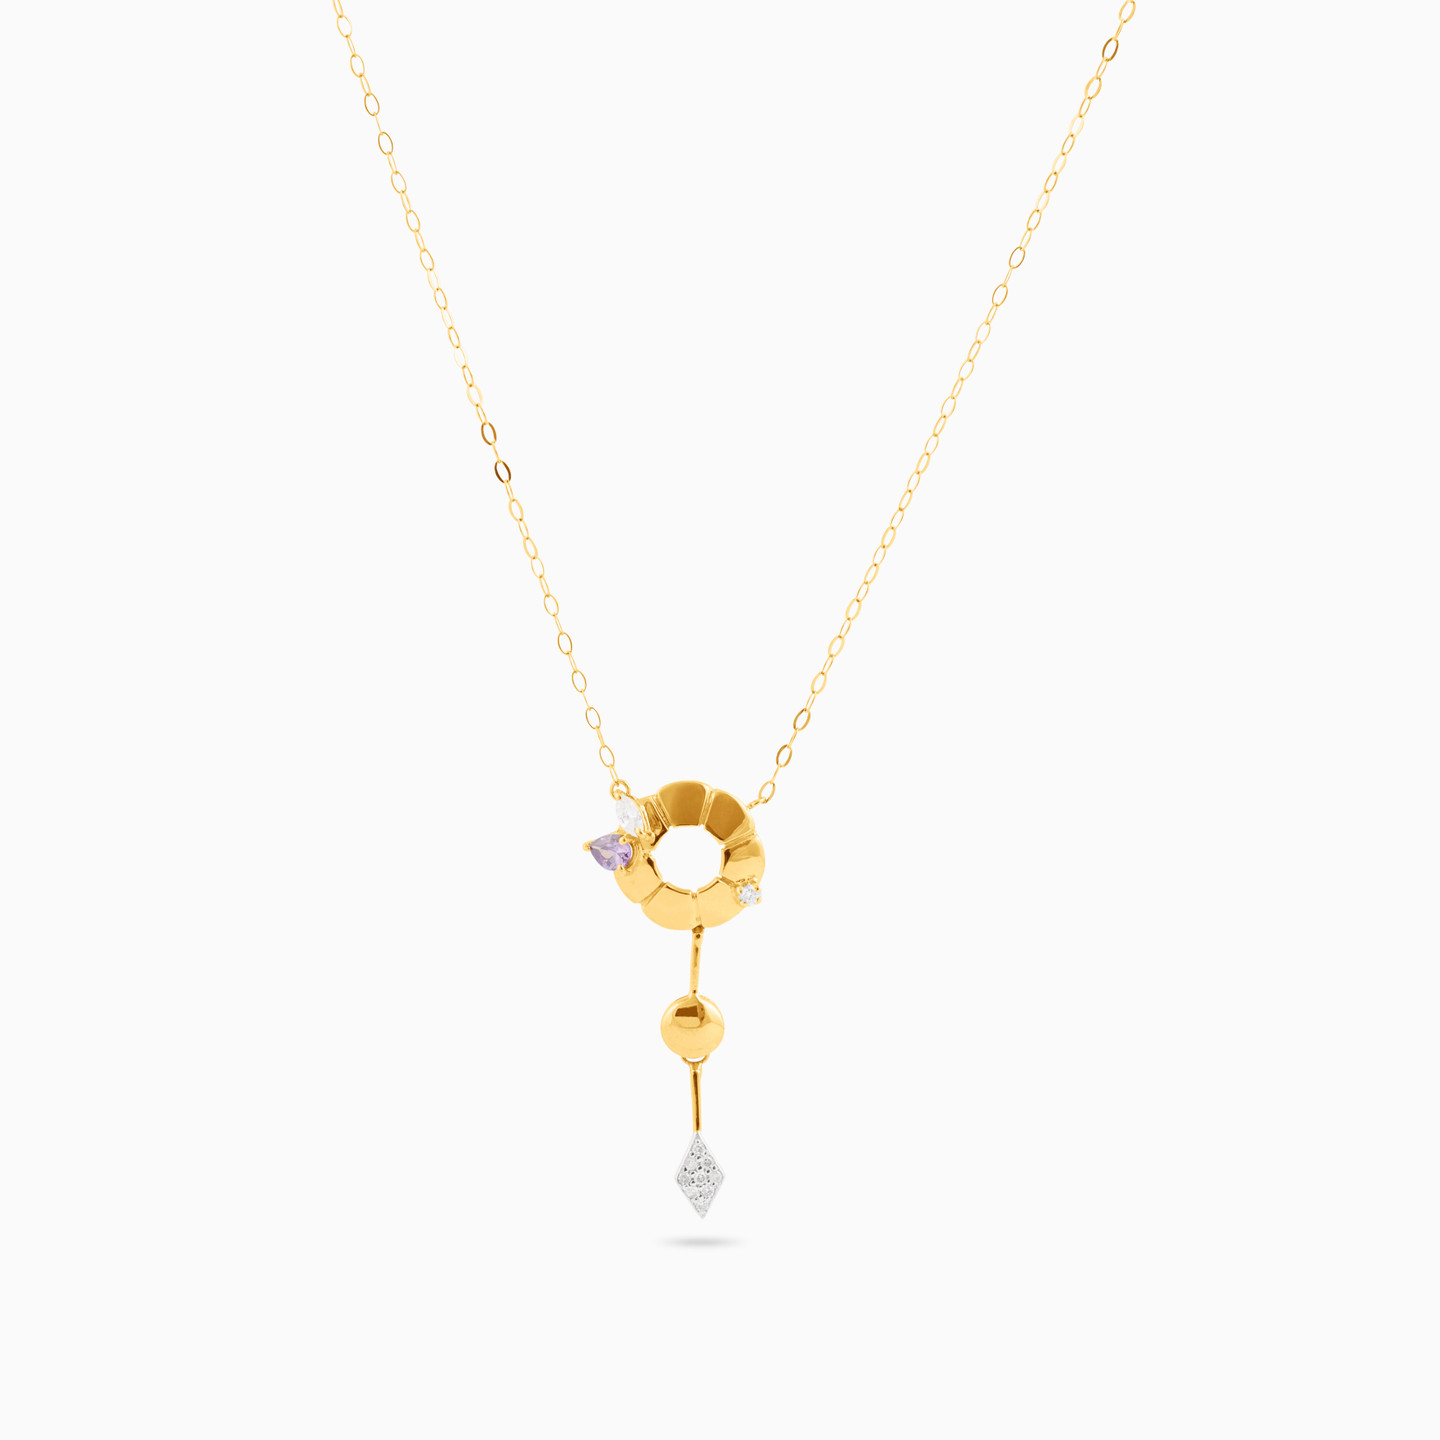 18K Gold Diamond & Colored Stones Drop Pendant Necklace - 3